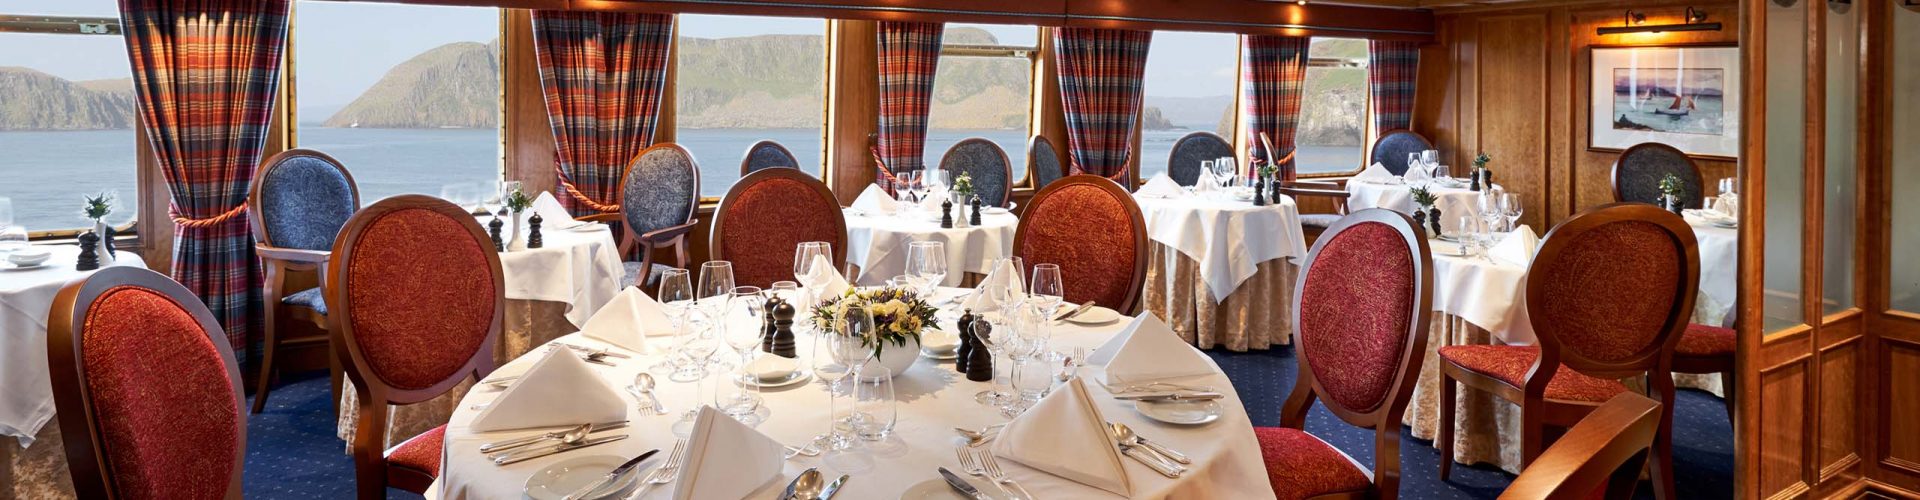 The Columba Restaurant on the Princess Deck on the Hebridean Princess cruise ship of Hebridean Island Cruises